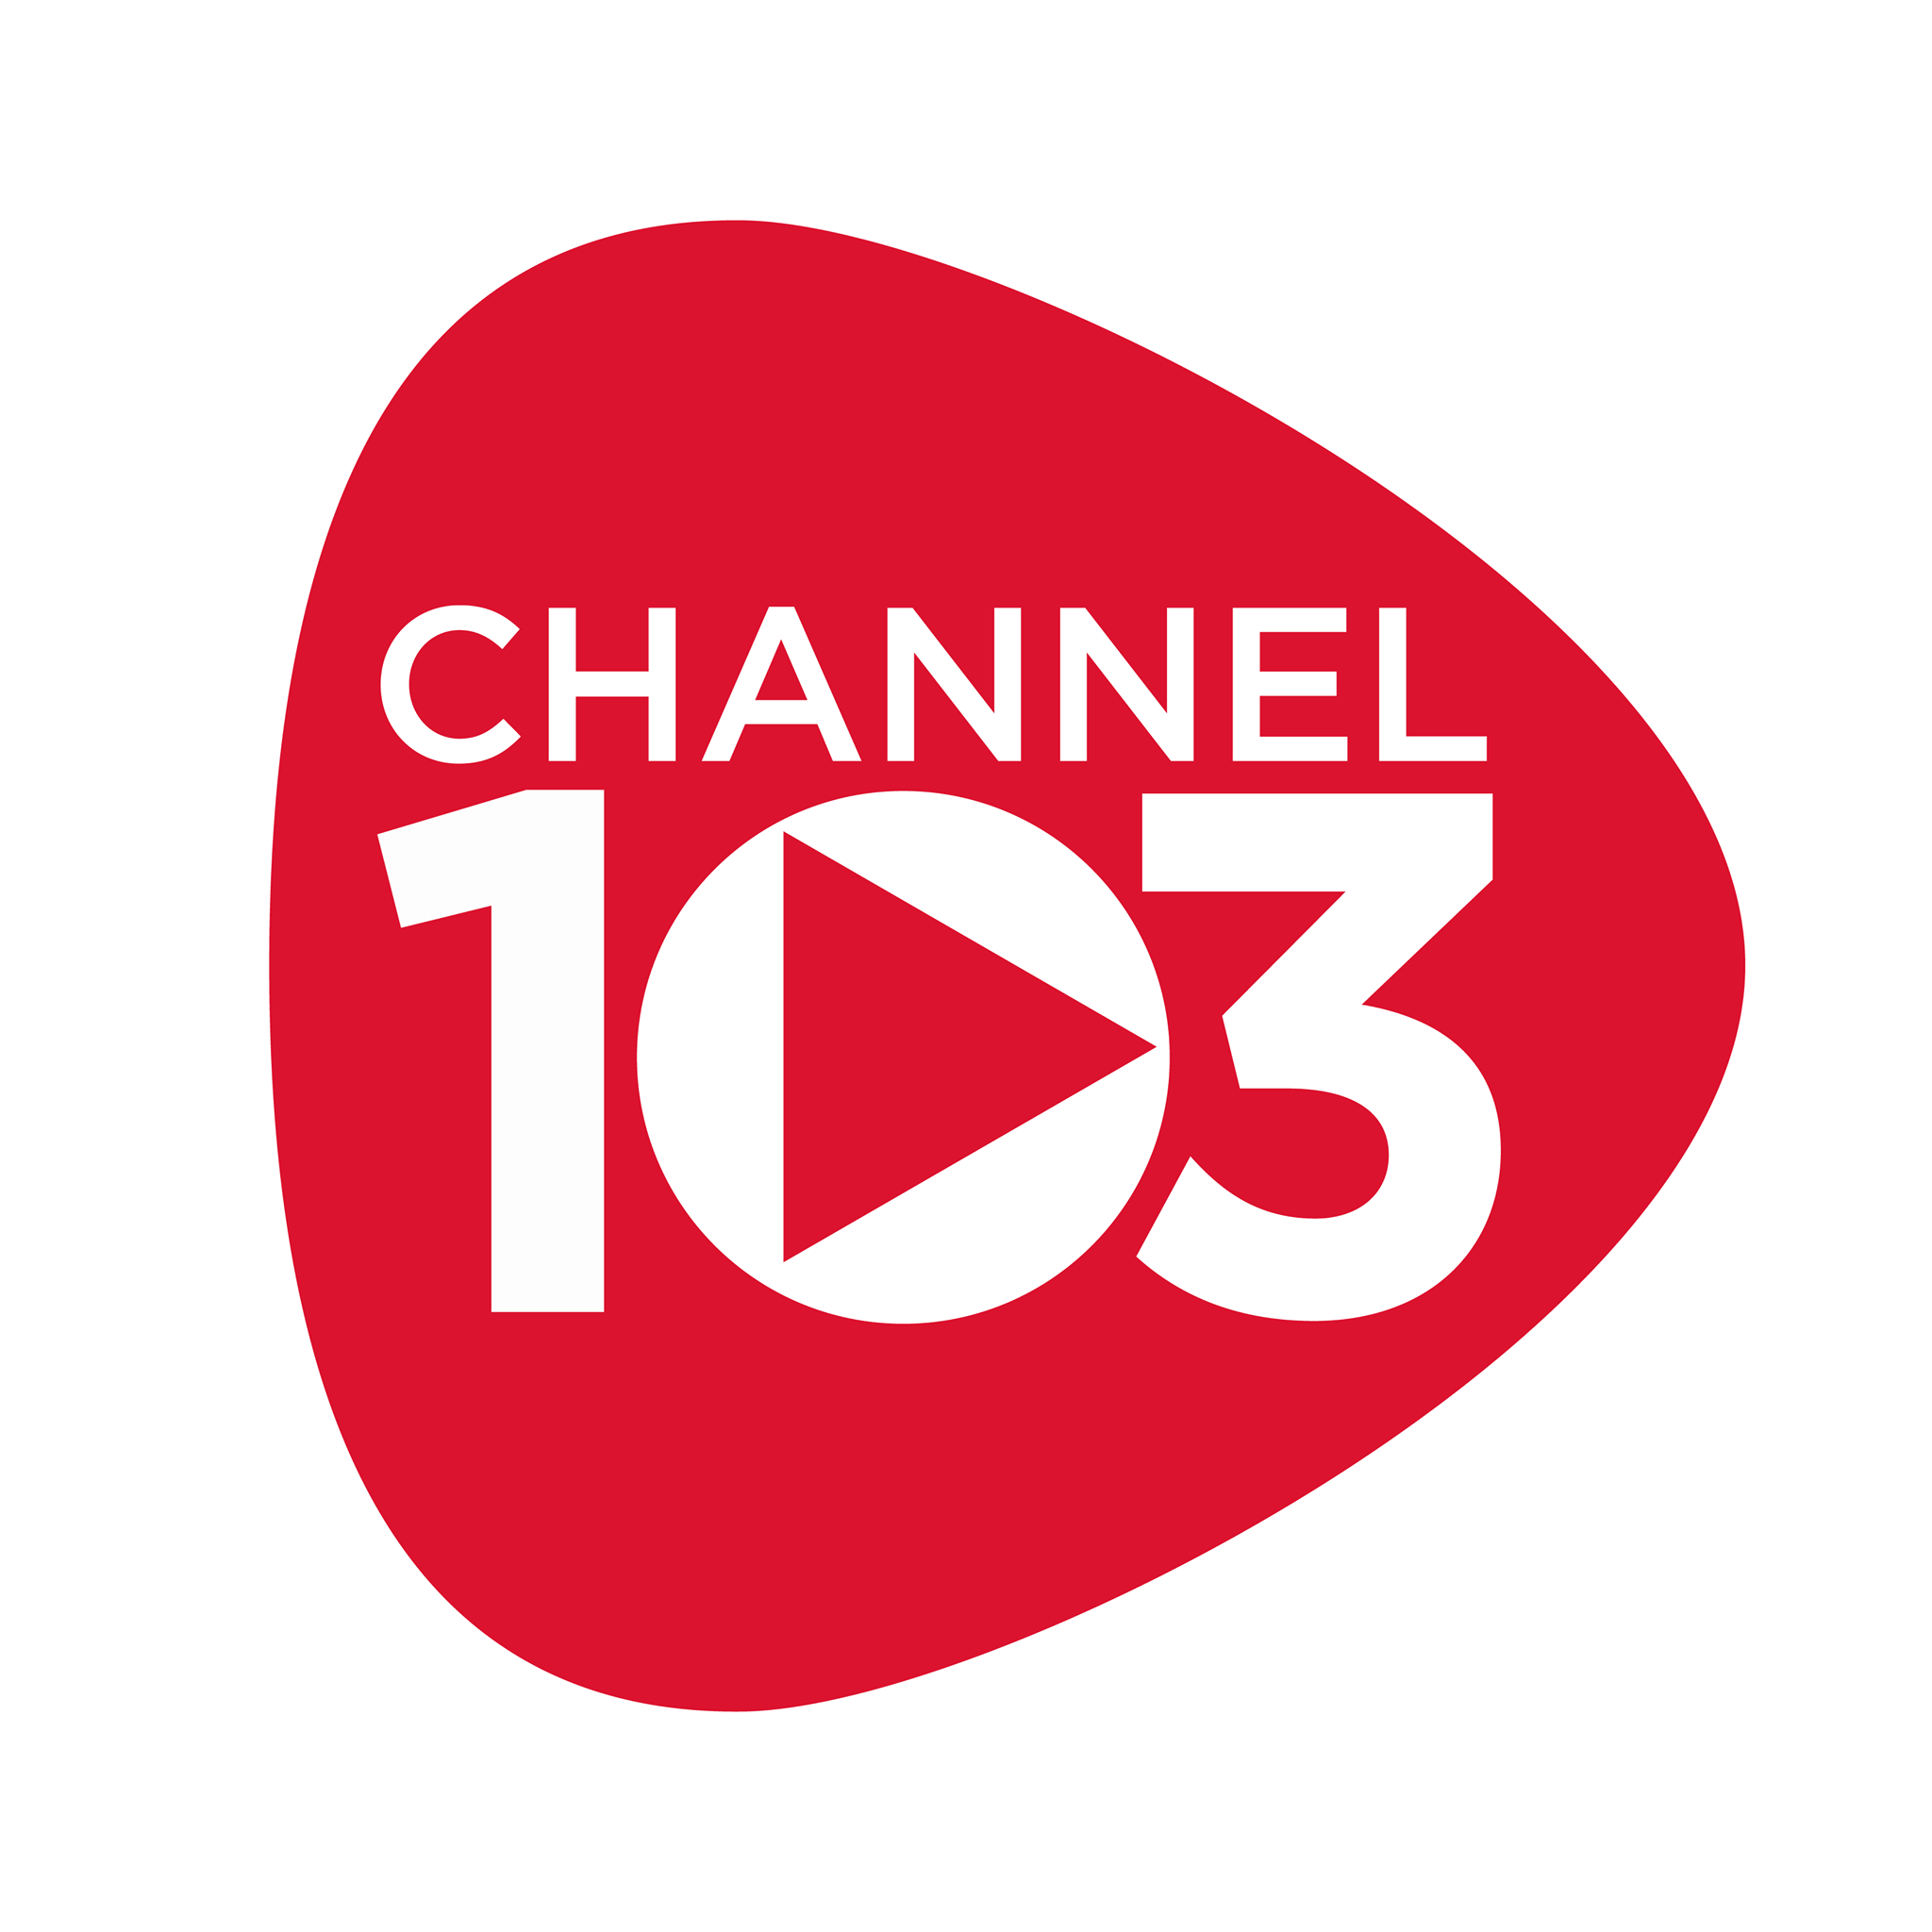 Radijas internetu Channel 103fm